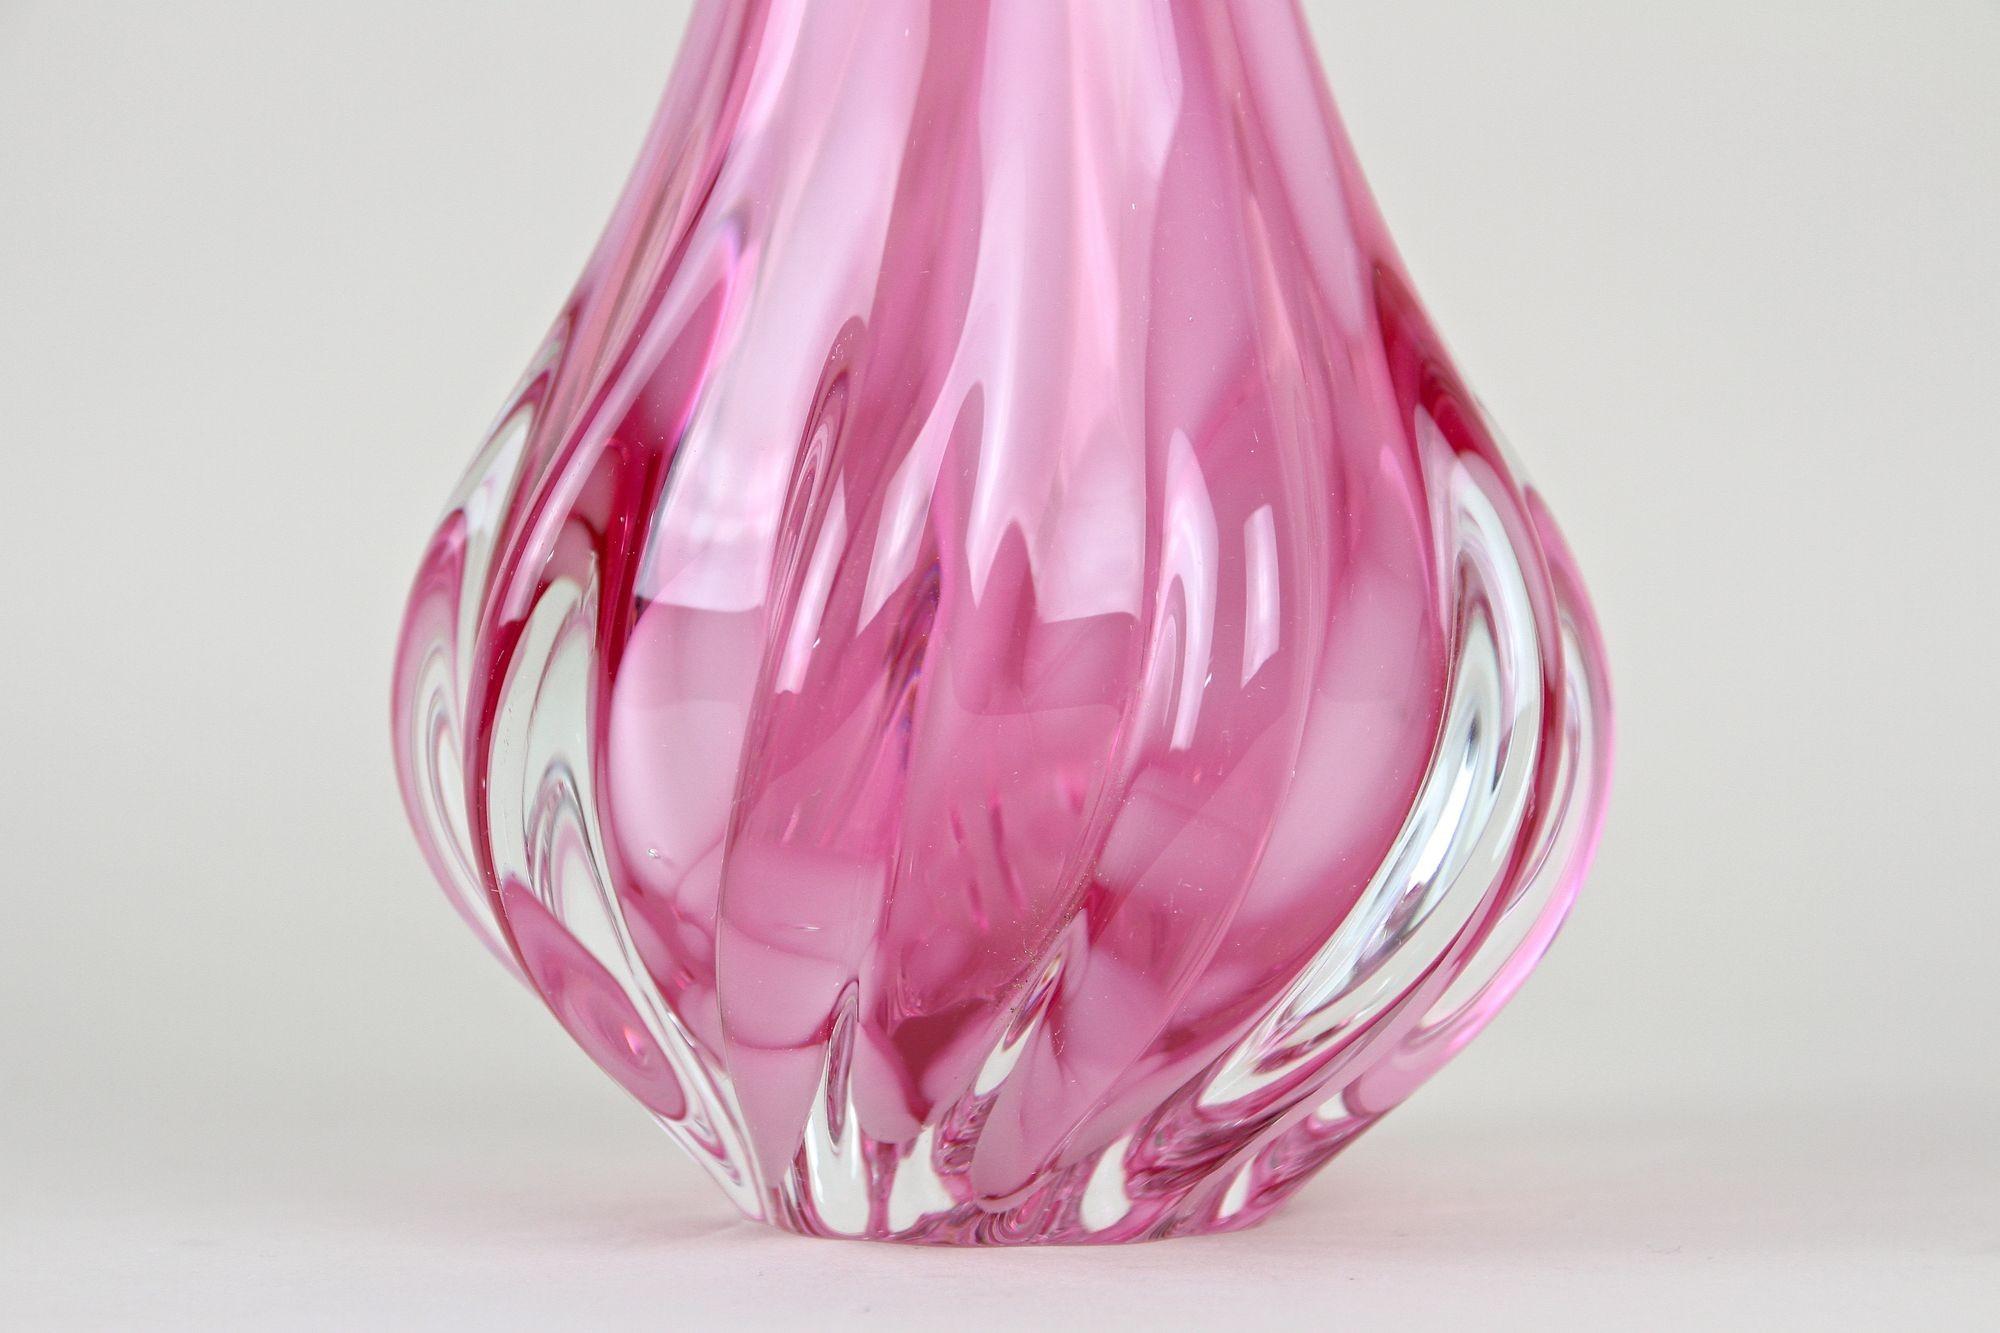 Magnifique vase en verre rose de Murano, de grande taille (16,1